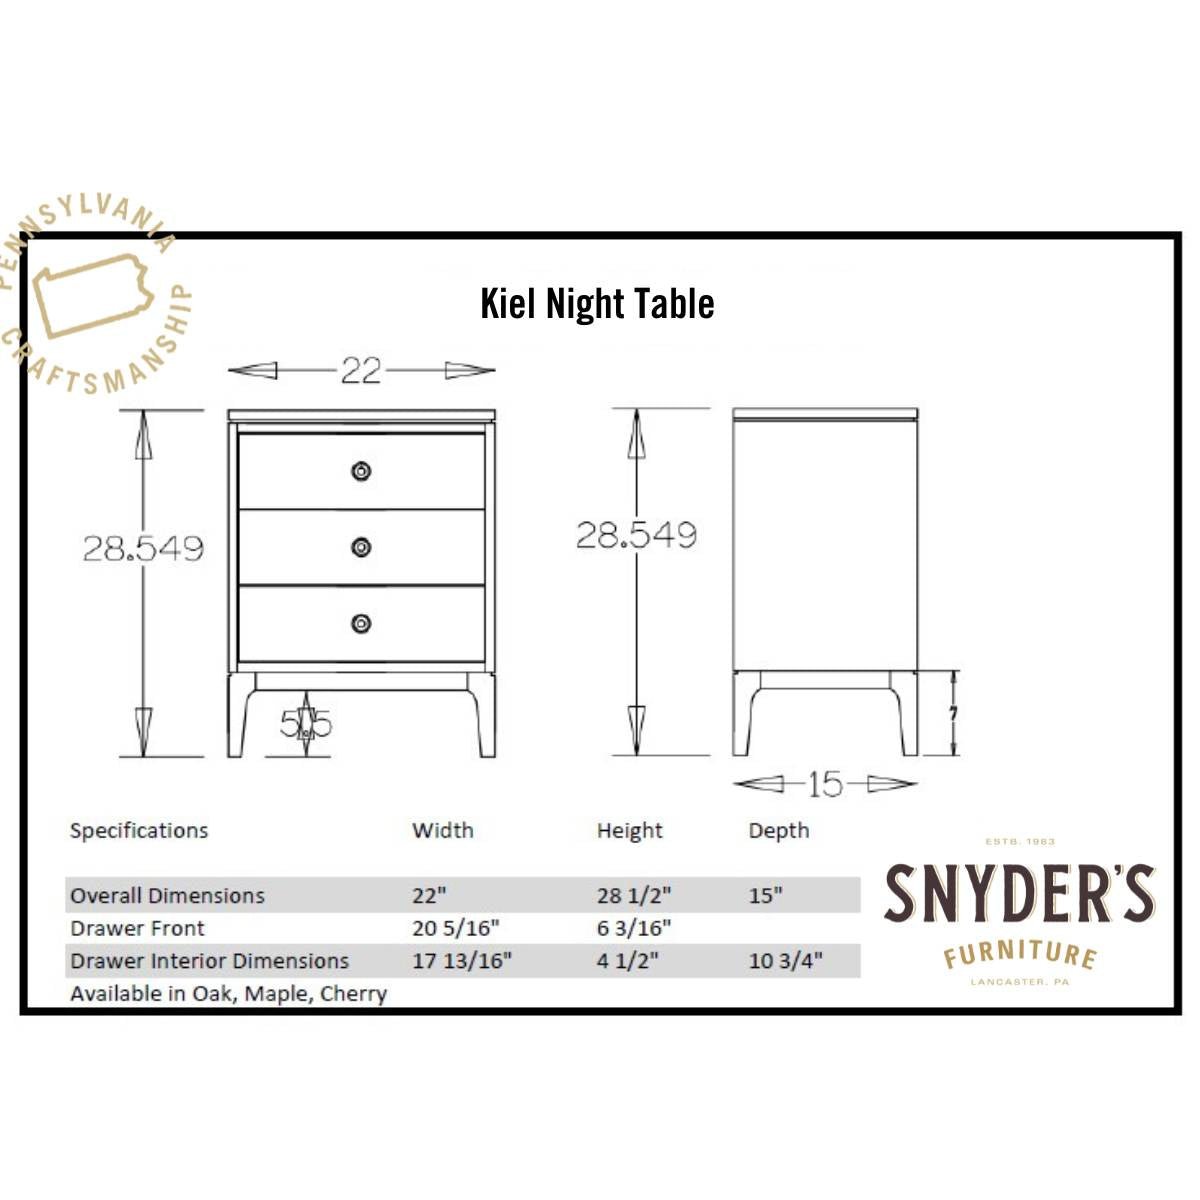 Kiel Night Table - snyders.furniture